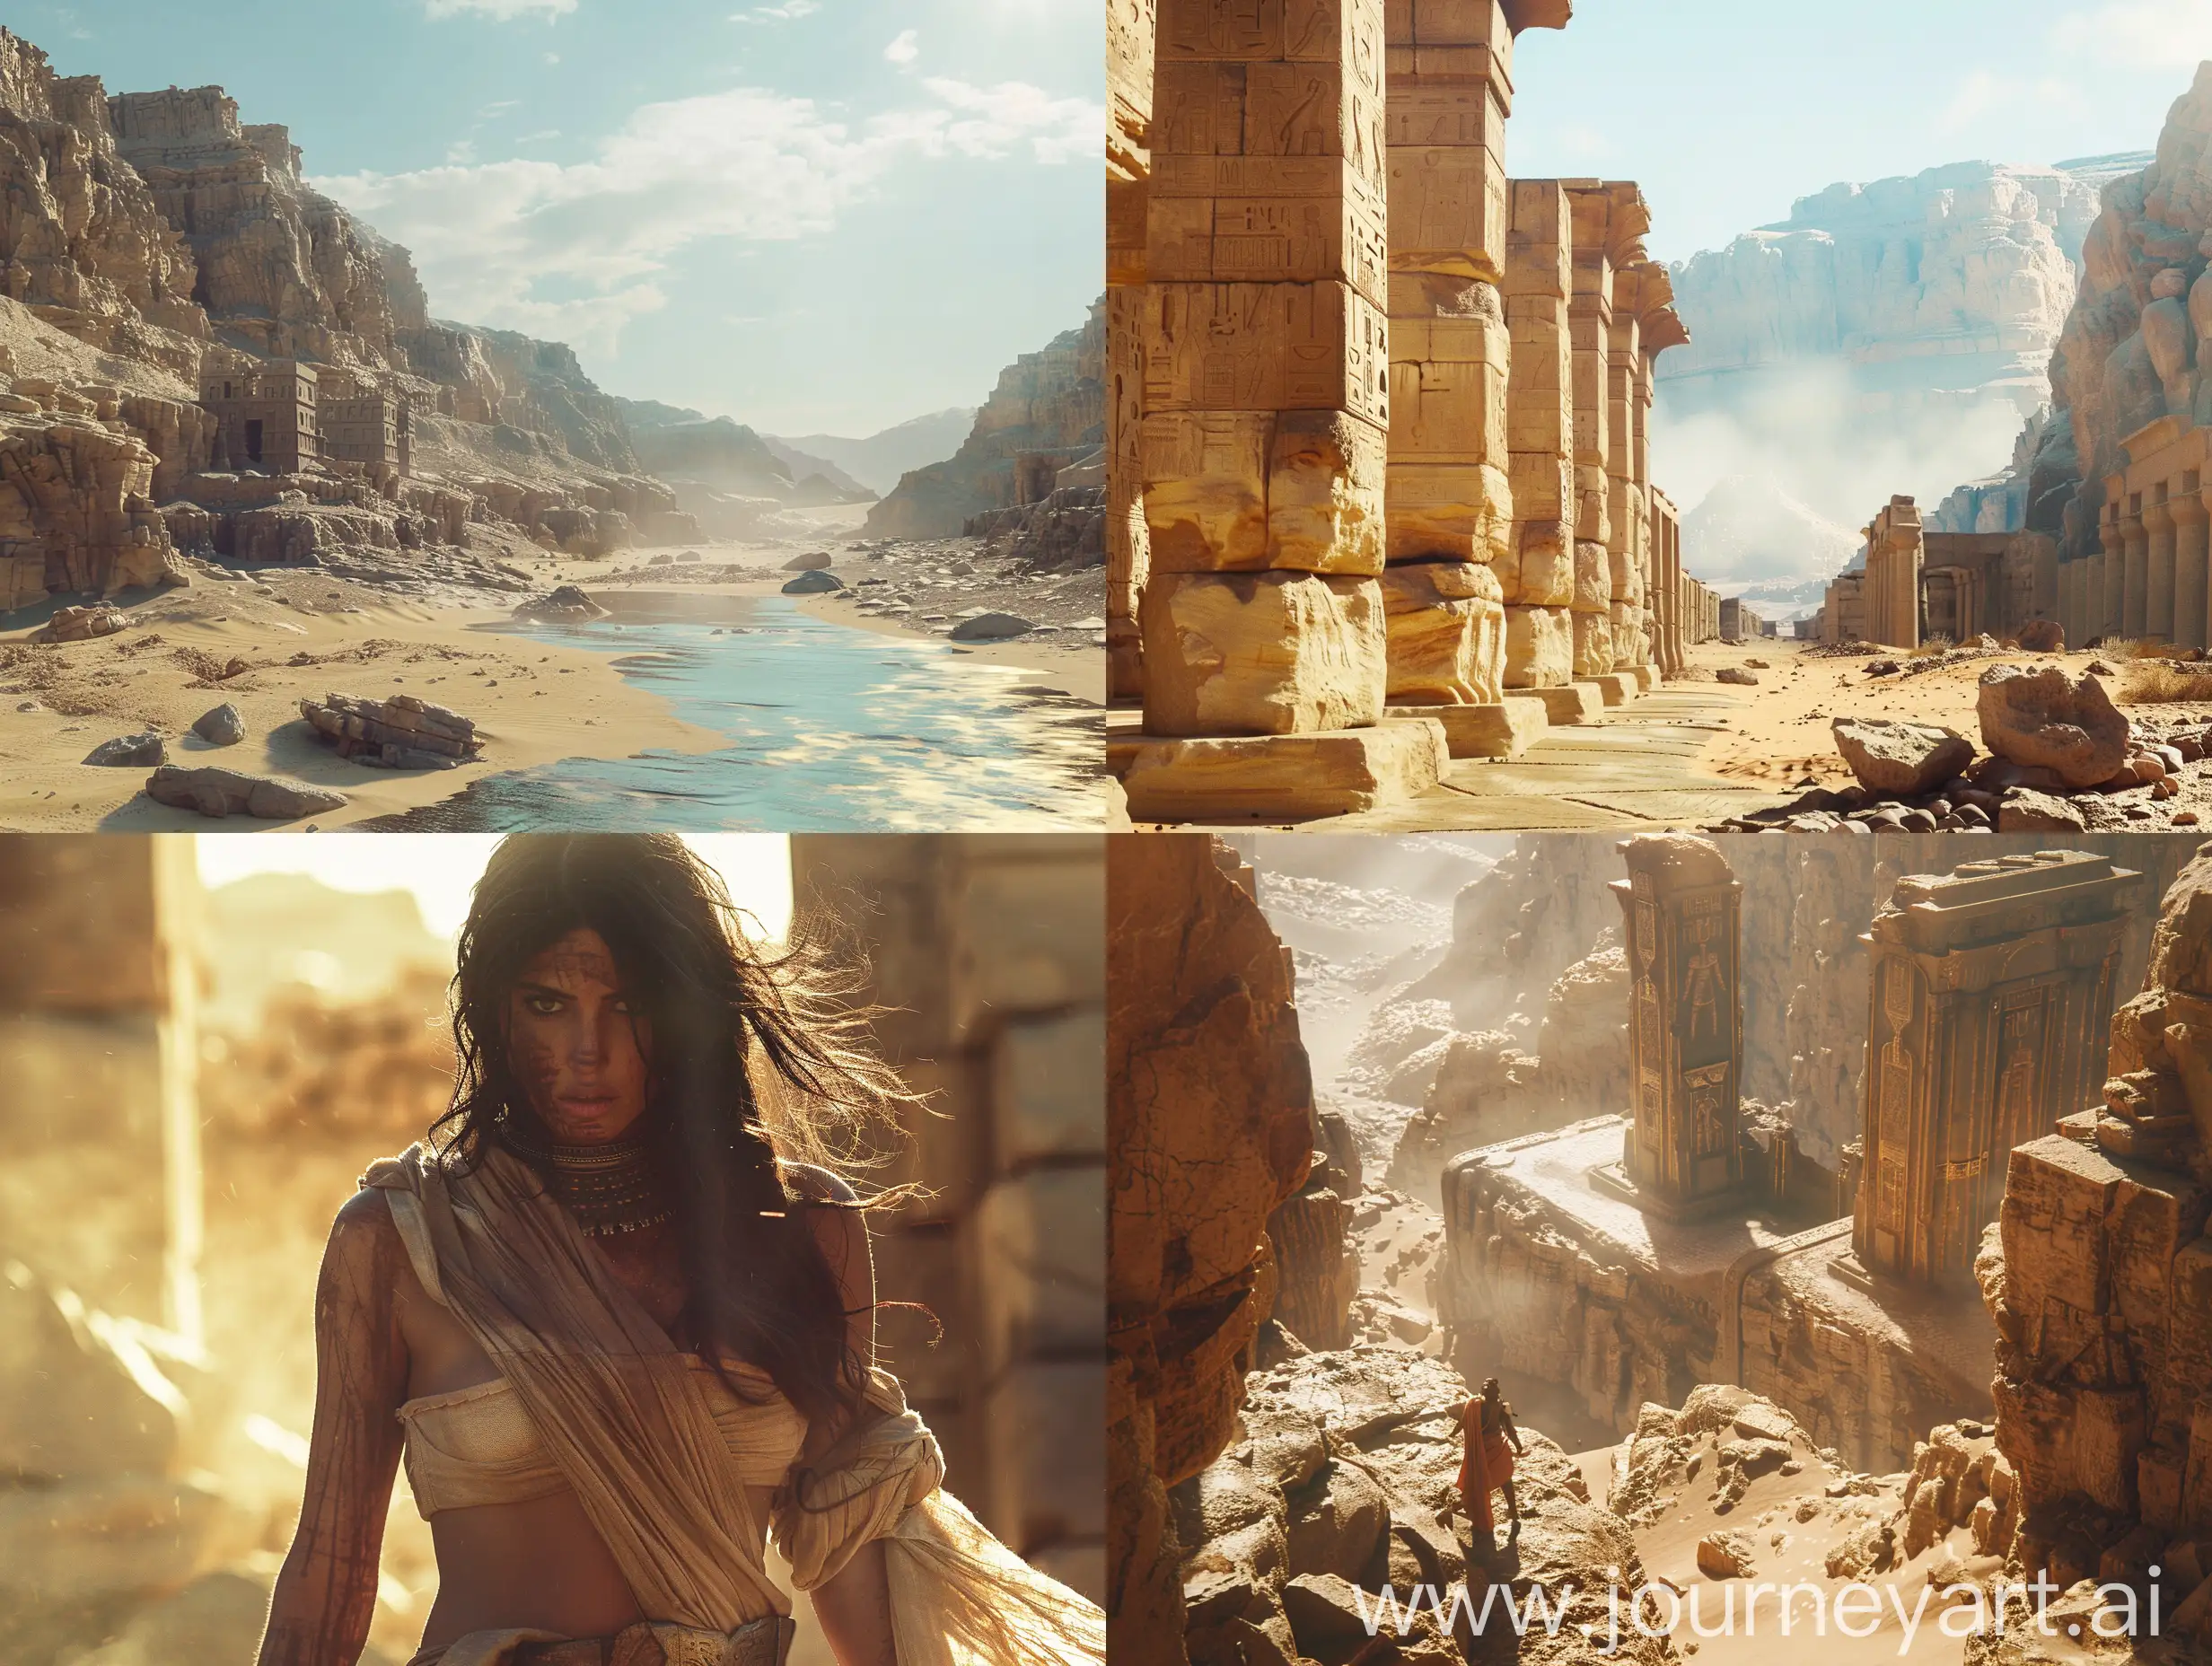 Realistic-8K-Photo-of-Ancient-Civilization-in-Desert-Sunlight